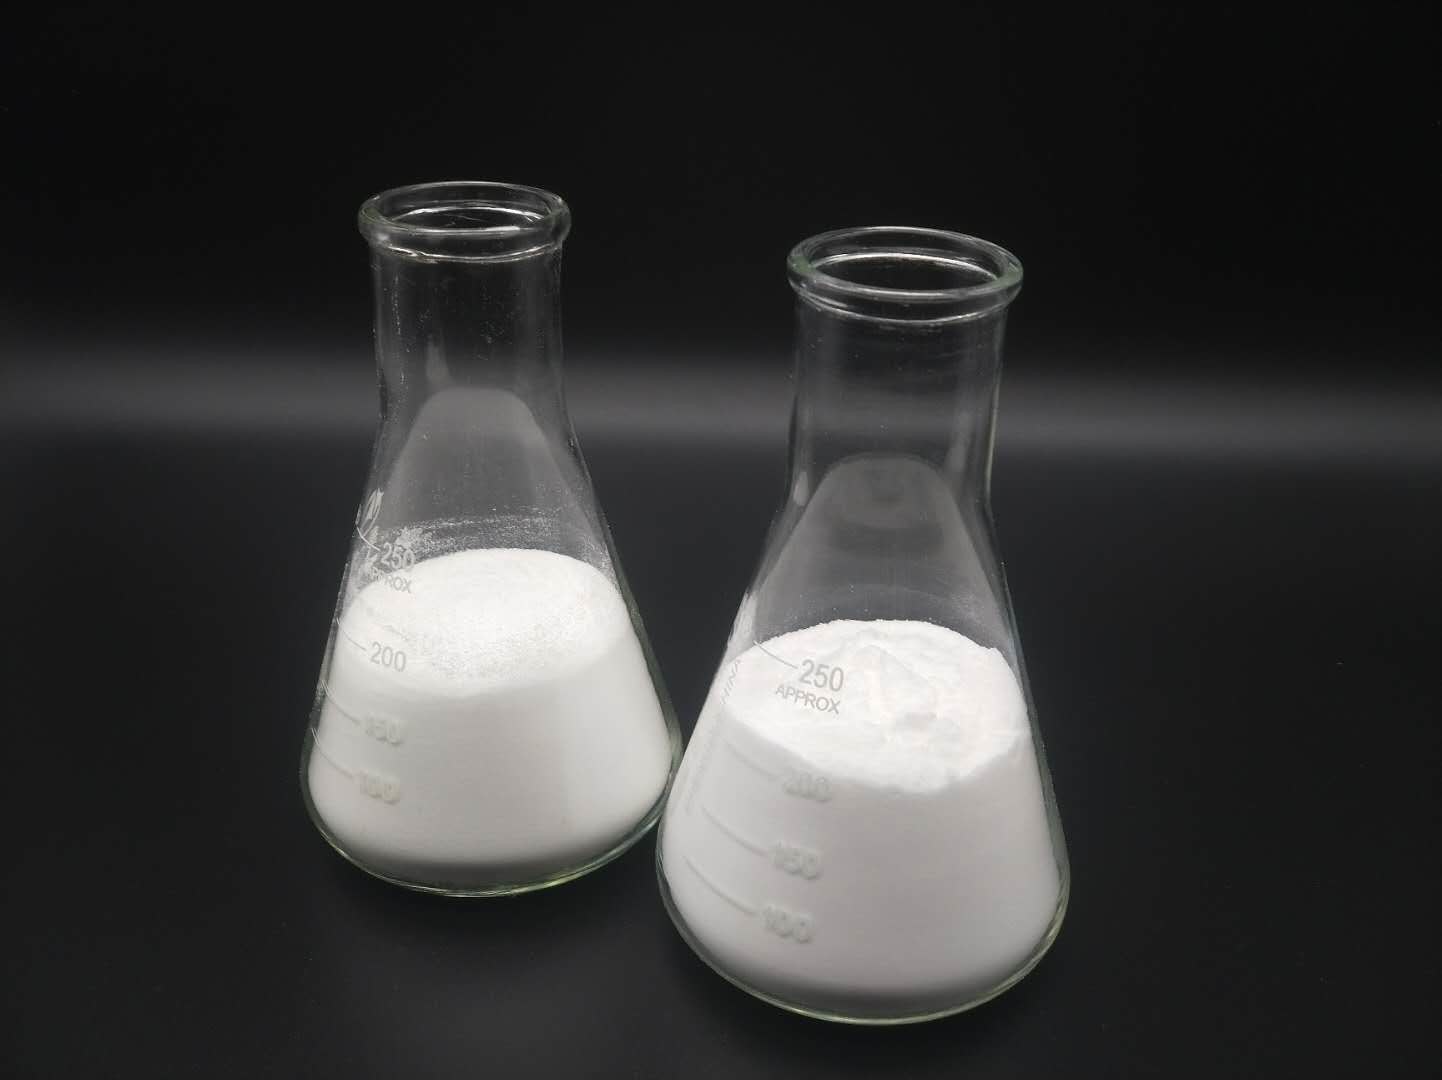  Non Toxic White Flake Oxidized Polyethylene Homopolymer For TPE Process Aids Manufactures